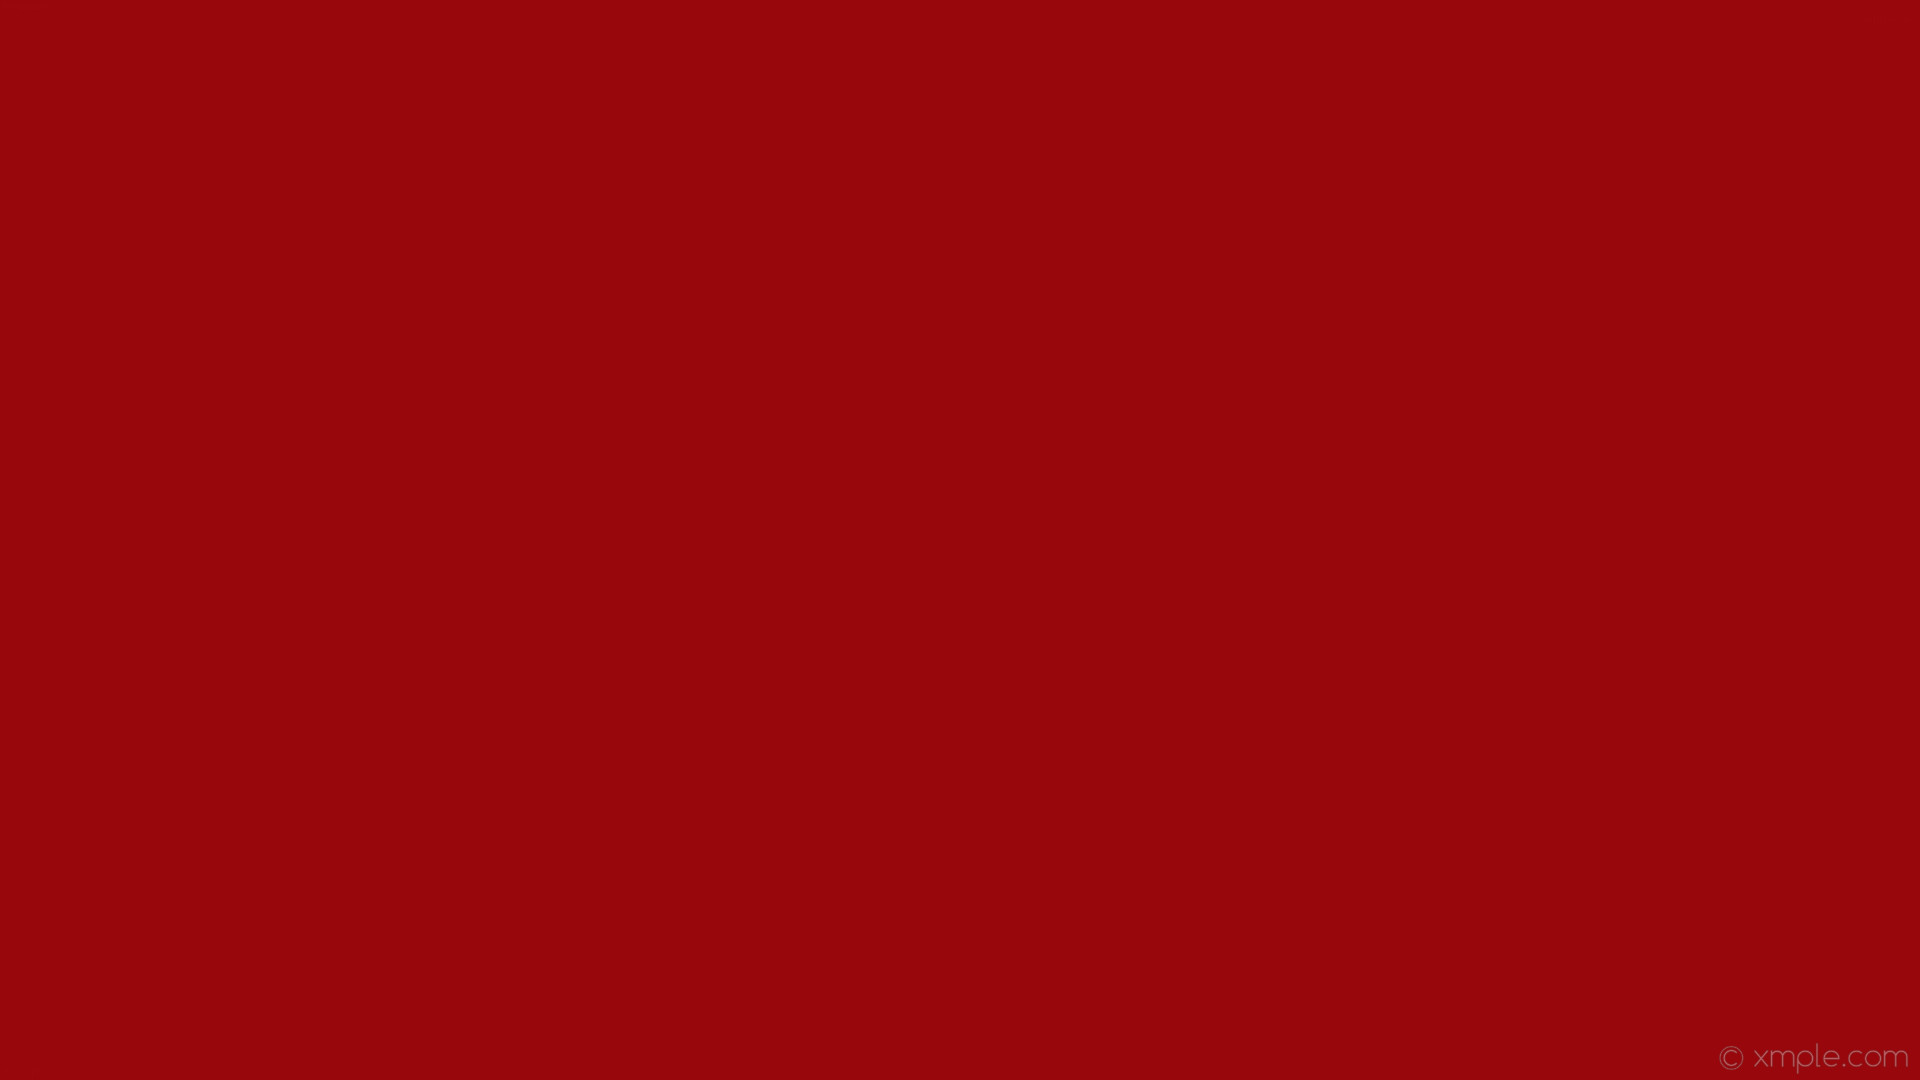 wallpaper red single plain solid color one colour #97070c